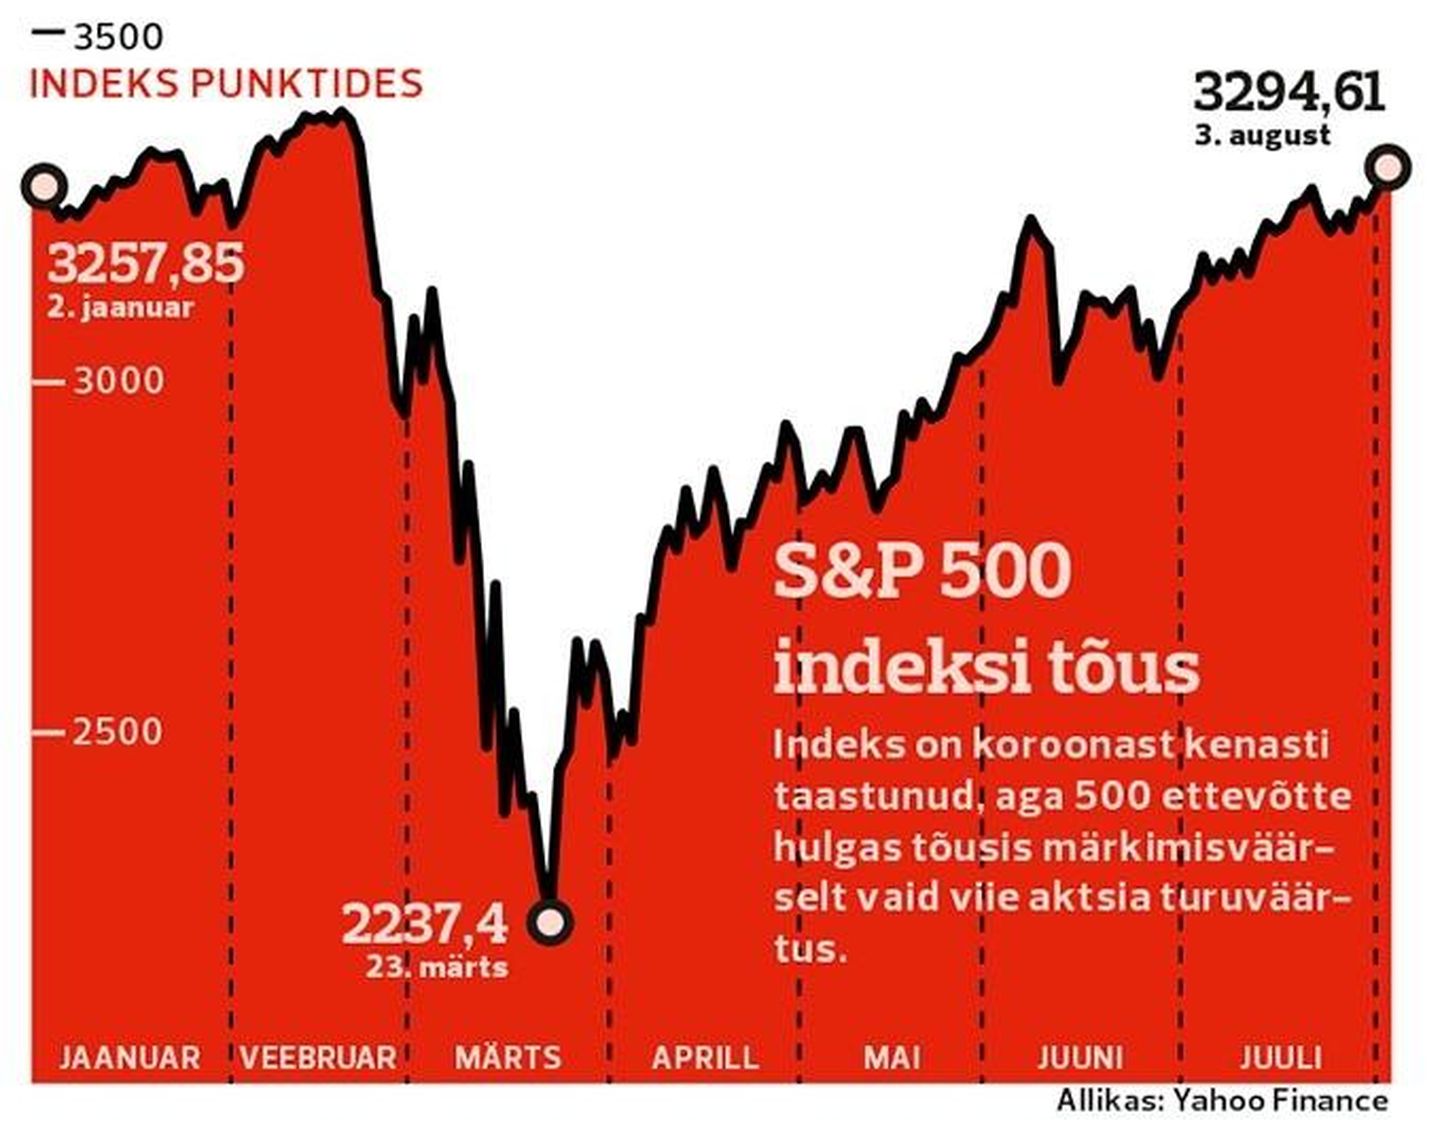 S&P 500 indeksi tõus.